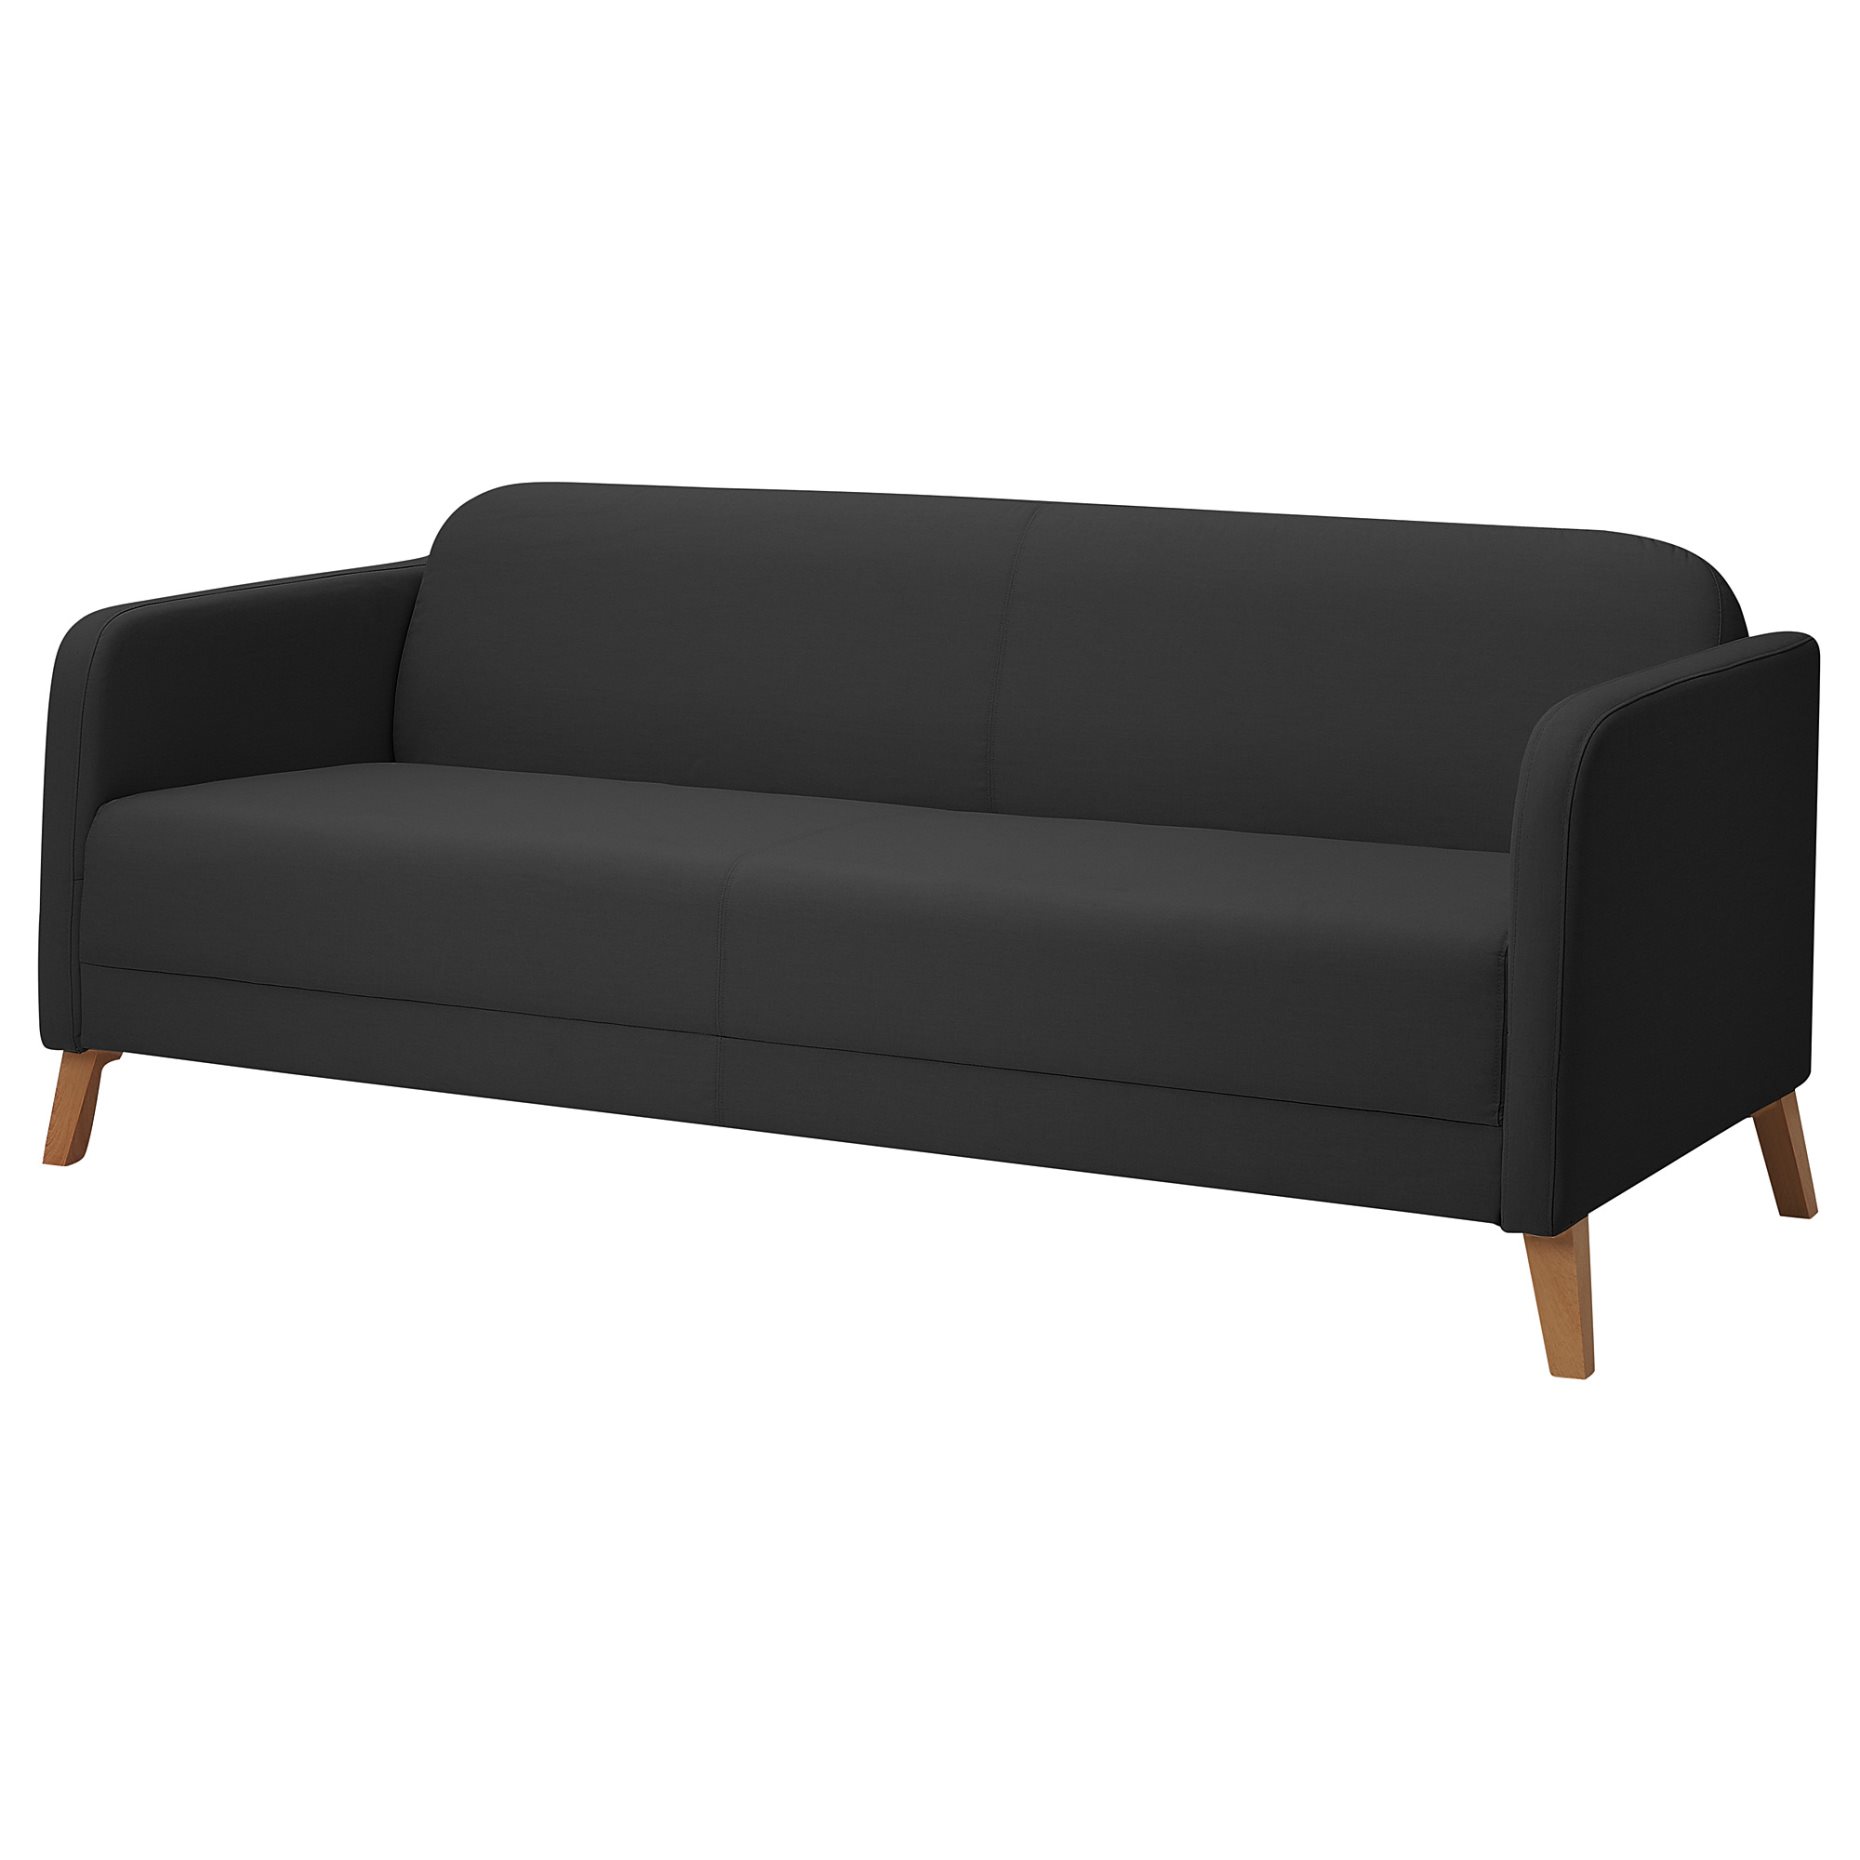 LINANÄS, 3-seat sofa, 205.122.45